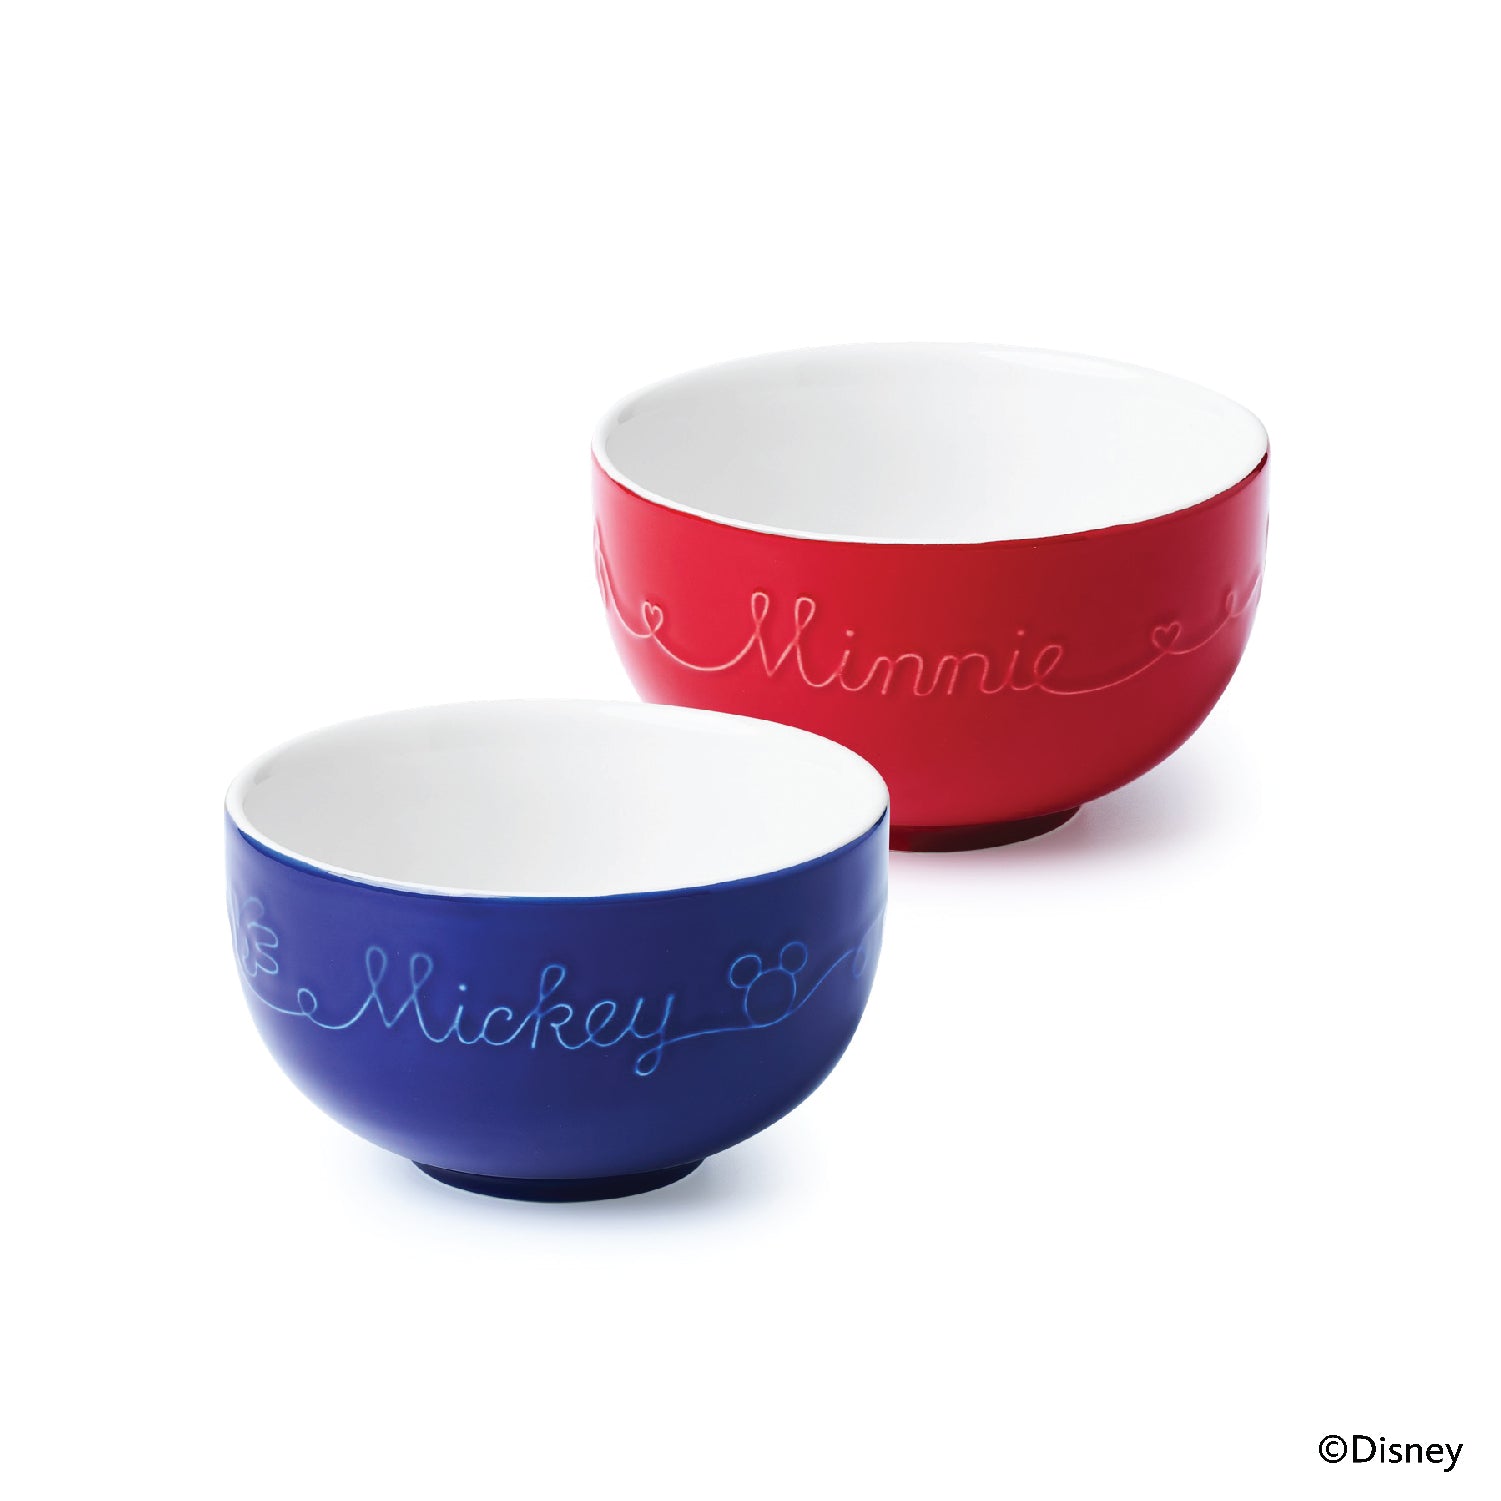 Meyer Disney Bon Voyage Ceramic Ramen Bowl Set of 2, 1 L Each (Red and Blue)